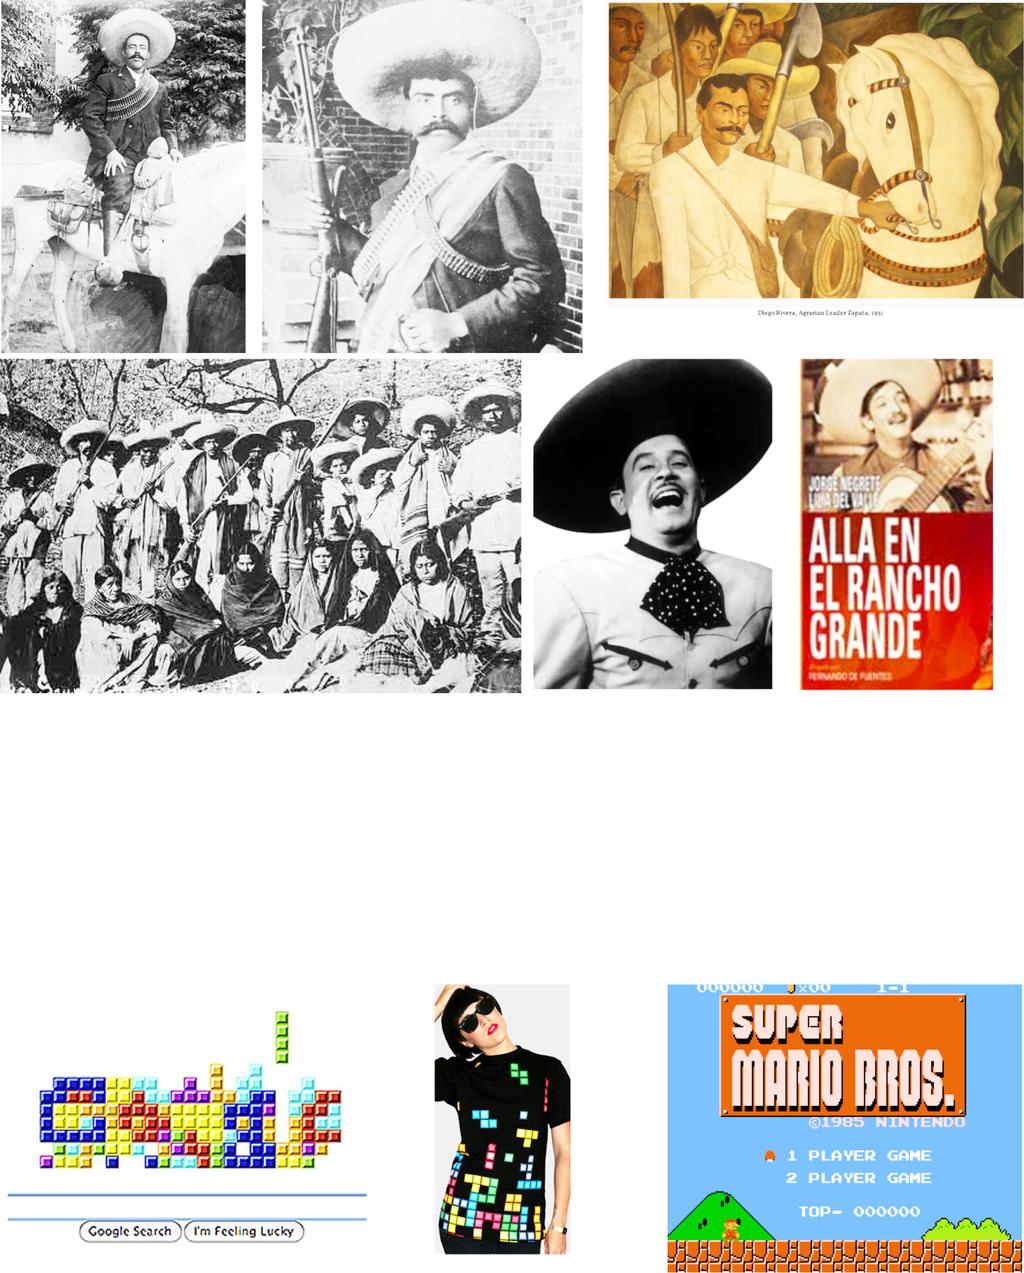 Mascota Nombre: Pique País: México Año: 1986 Diseñadores: Equipo de medios profesionales de comunicación SA conjunto musical que interpreta música de cuerdas, canto y trompetas típico de México, su